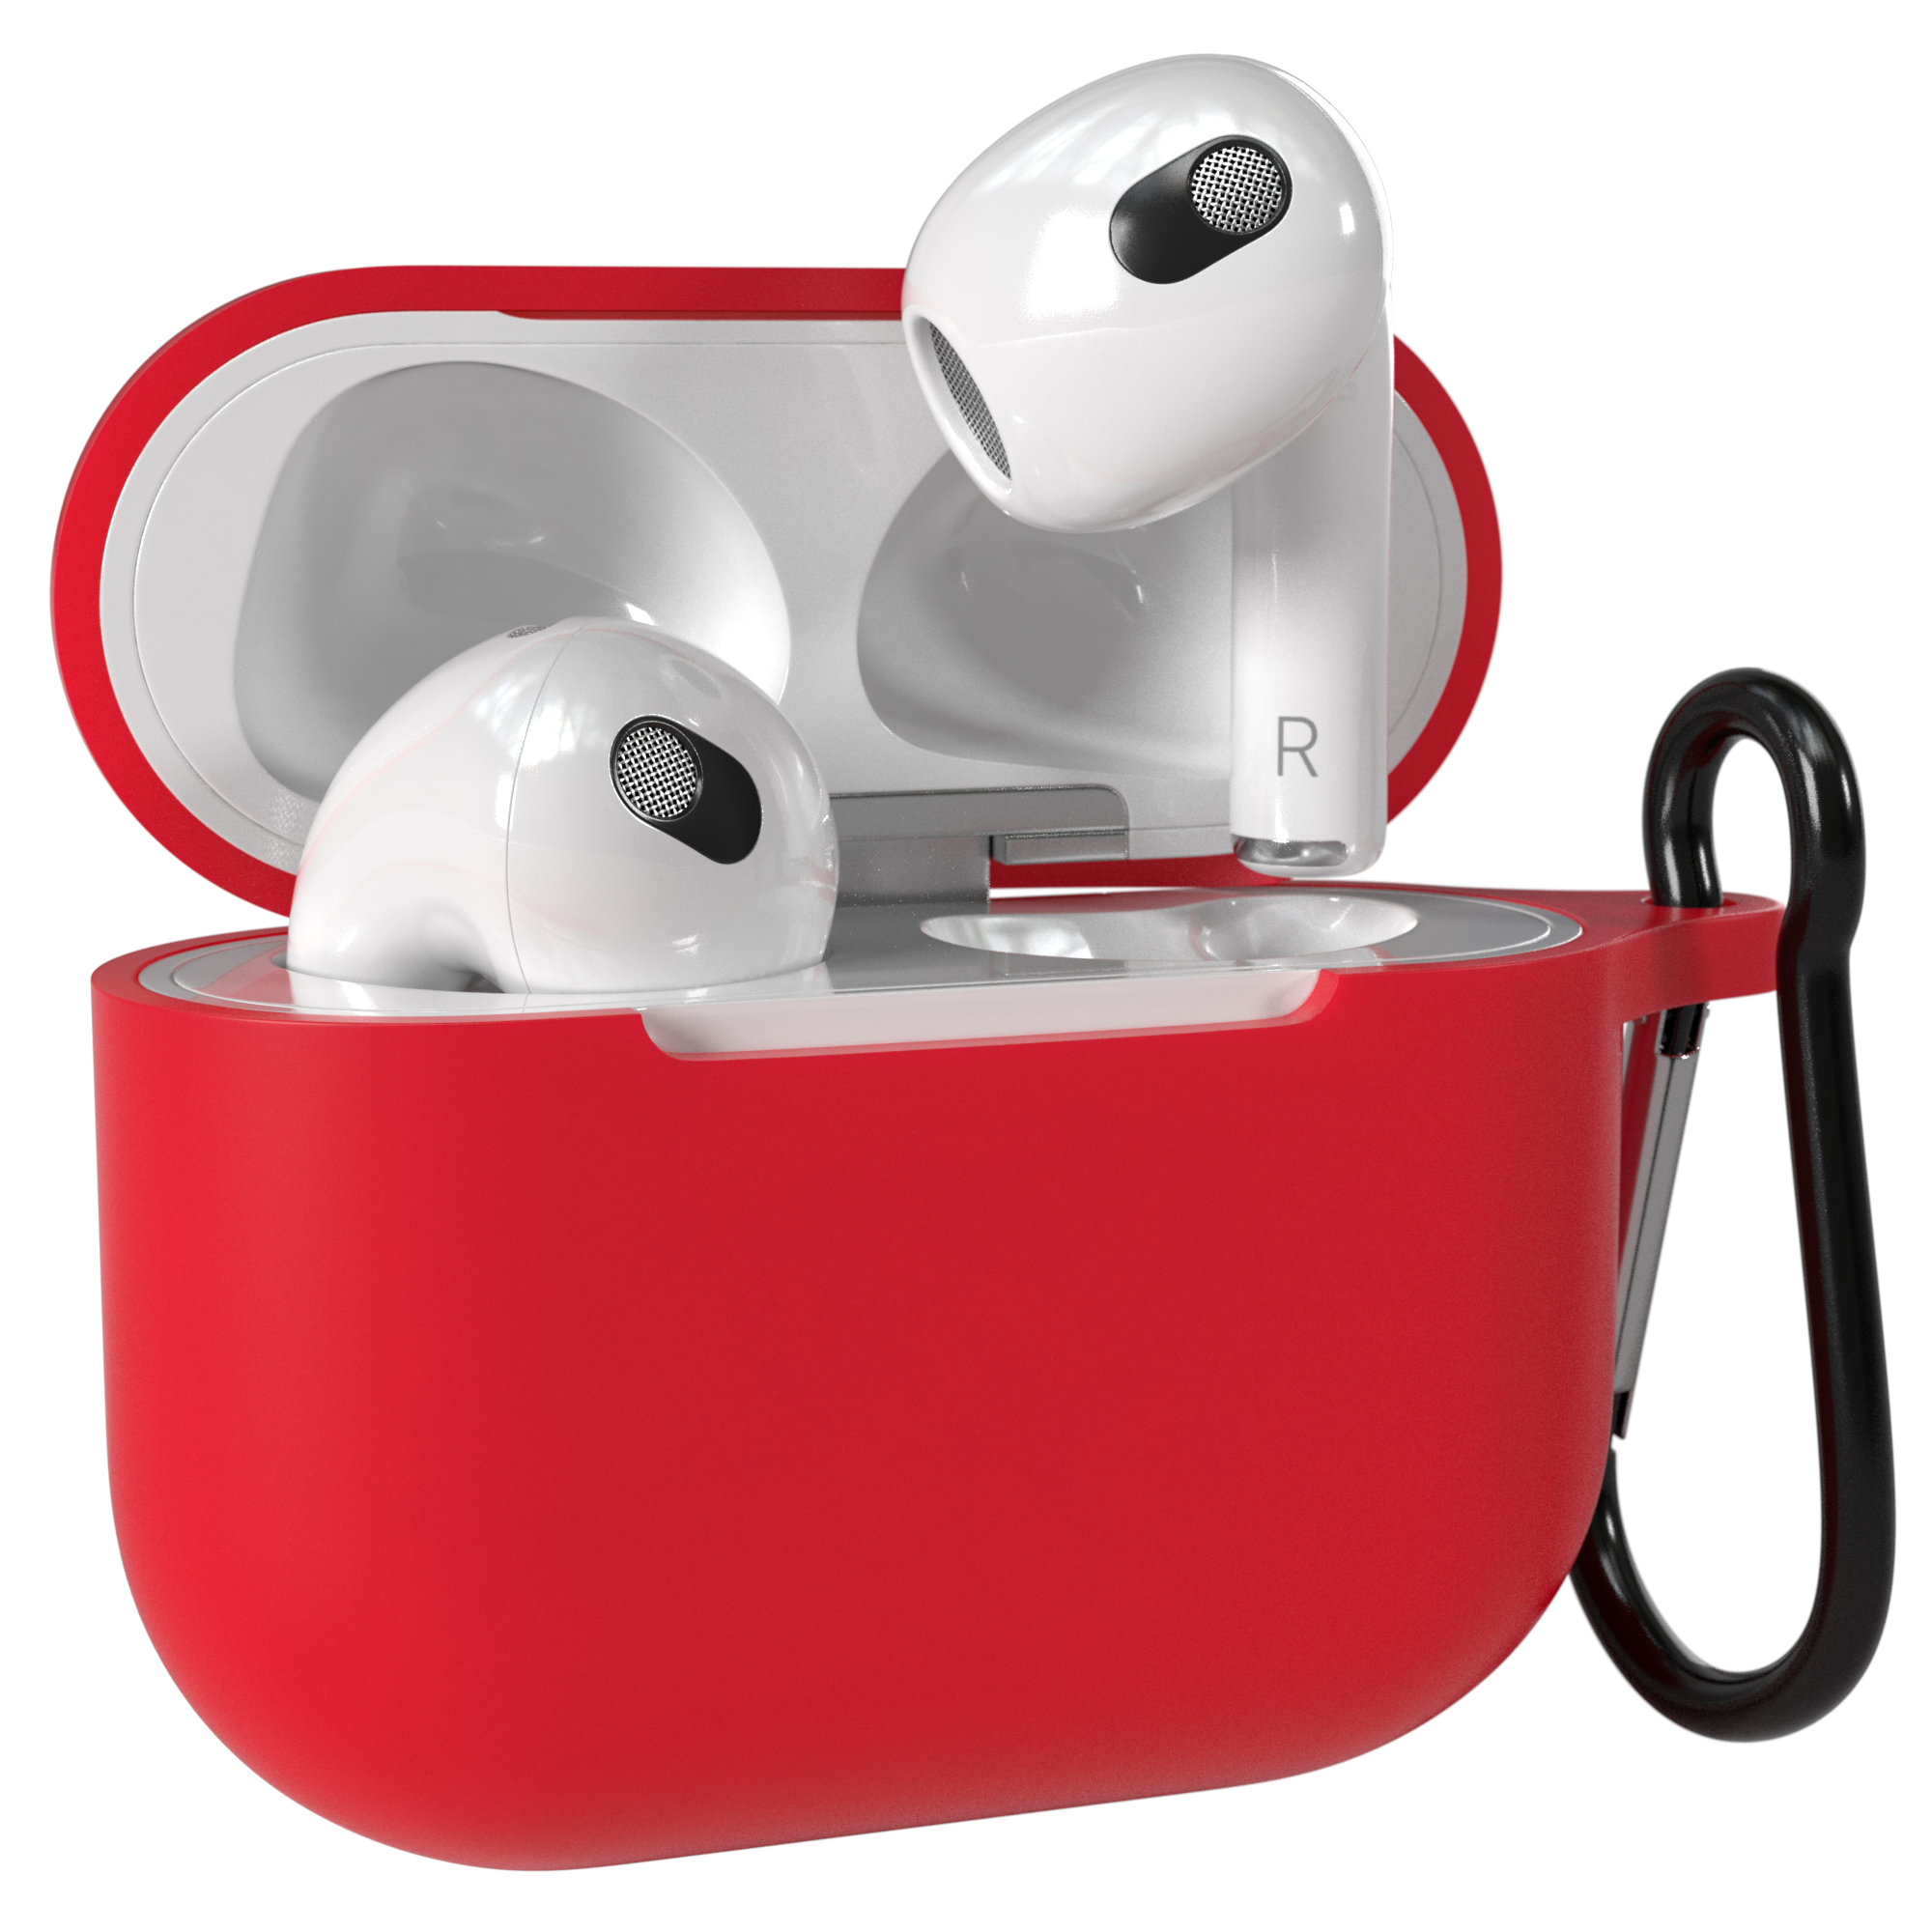 CASE EAZY Schutzhülle für: Rot Case AirPods Apple passend Silikon Sleeve 3